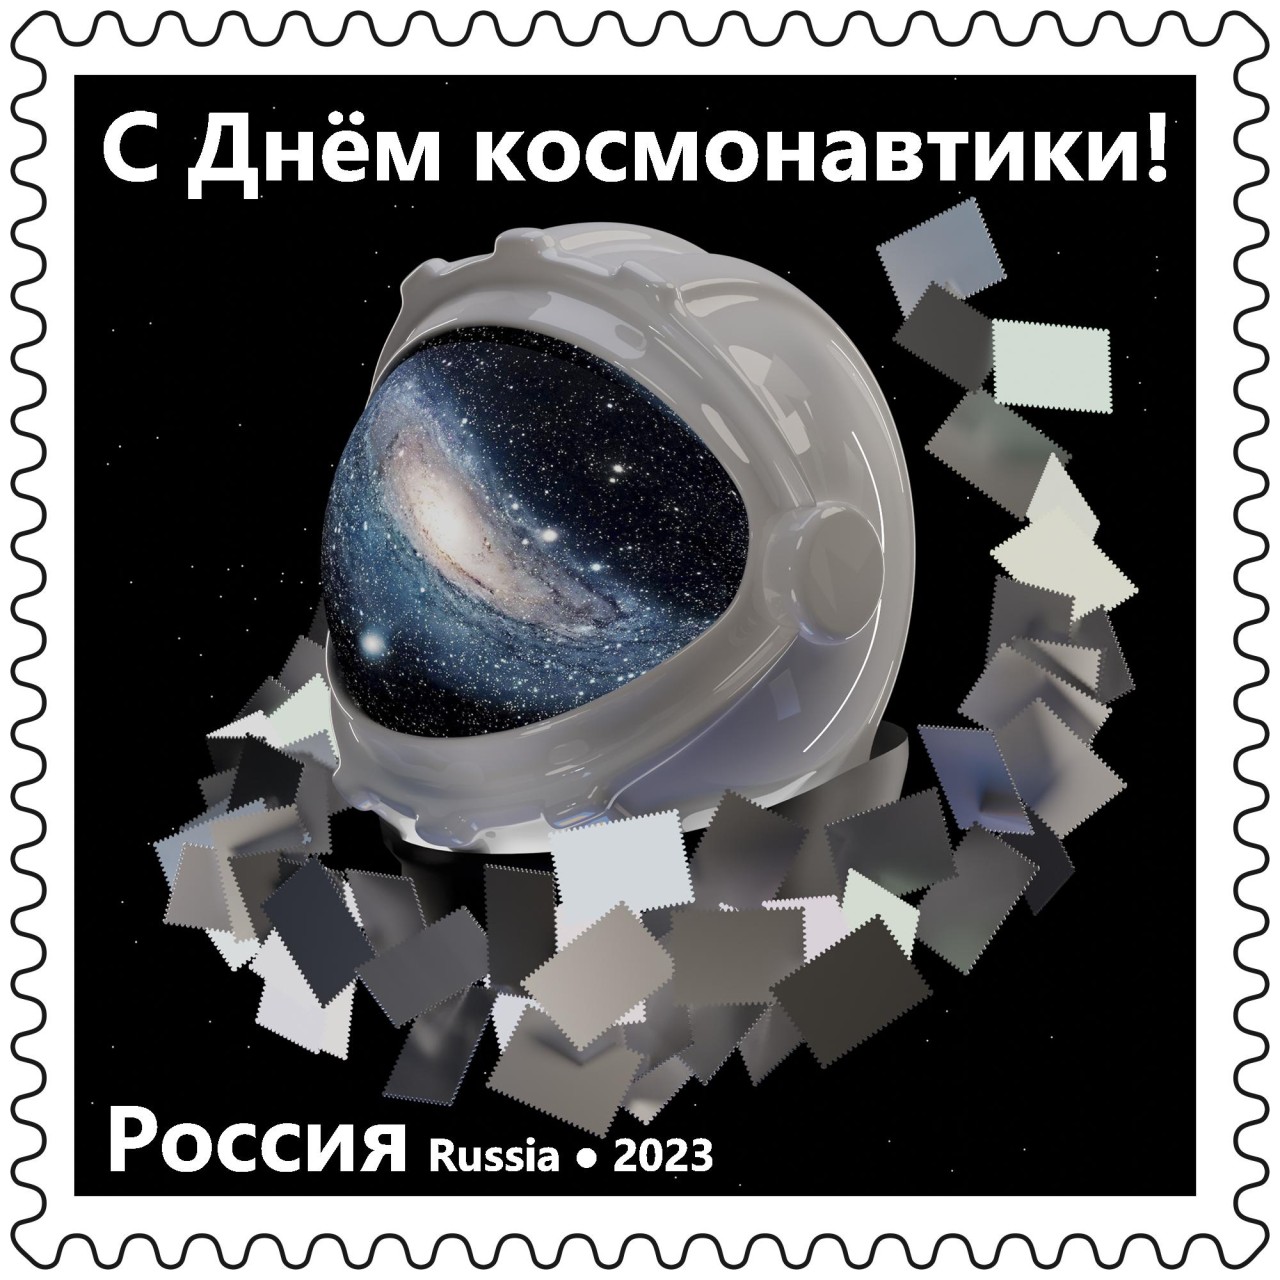 Космонавт-филателист